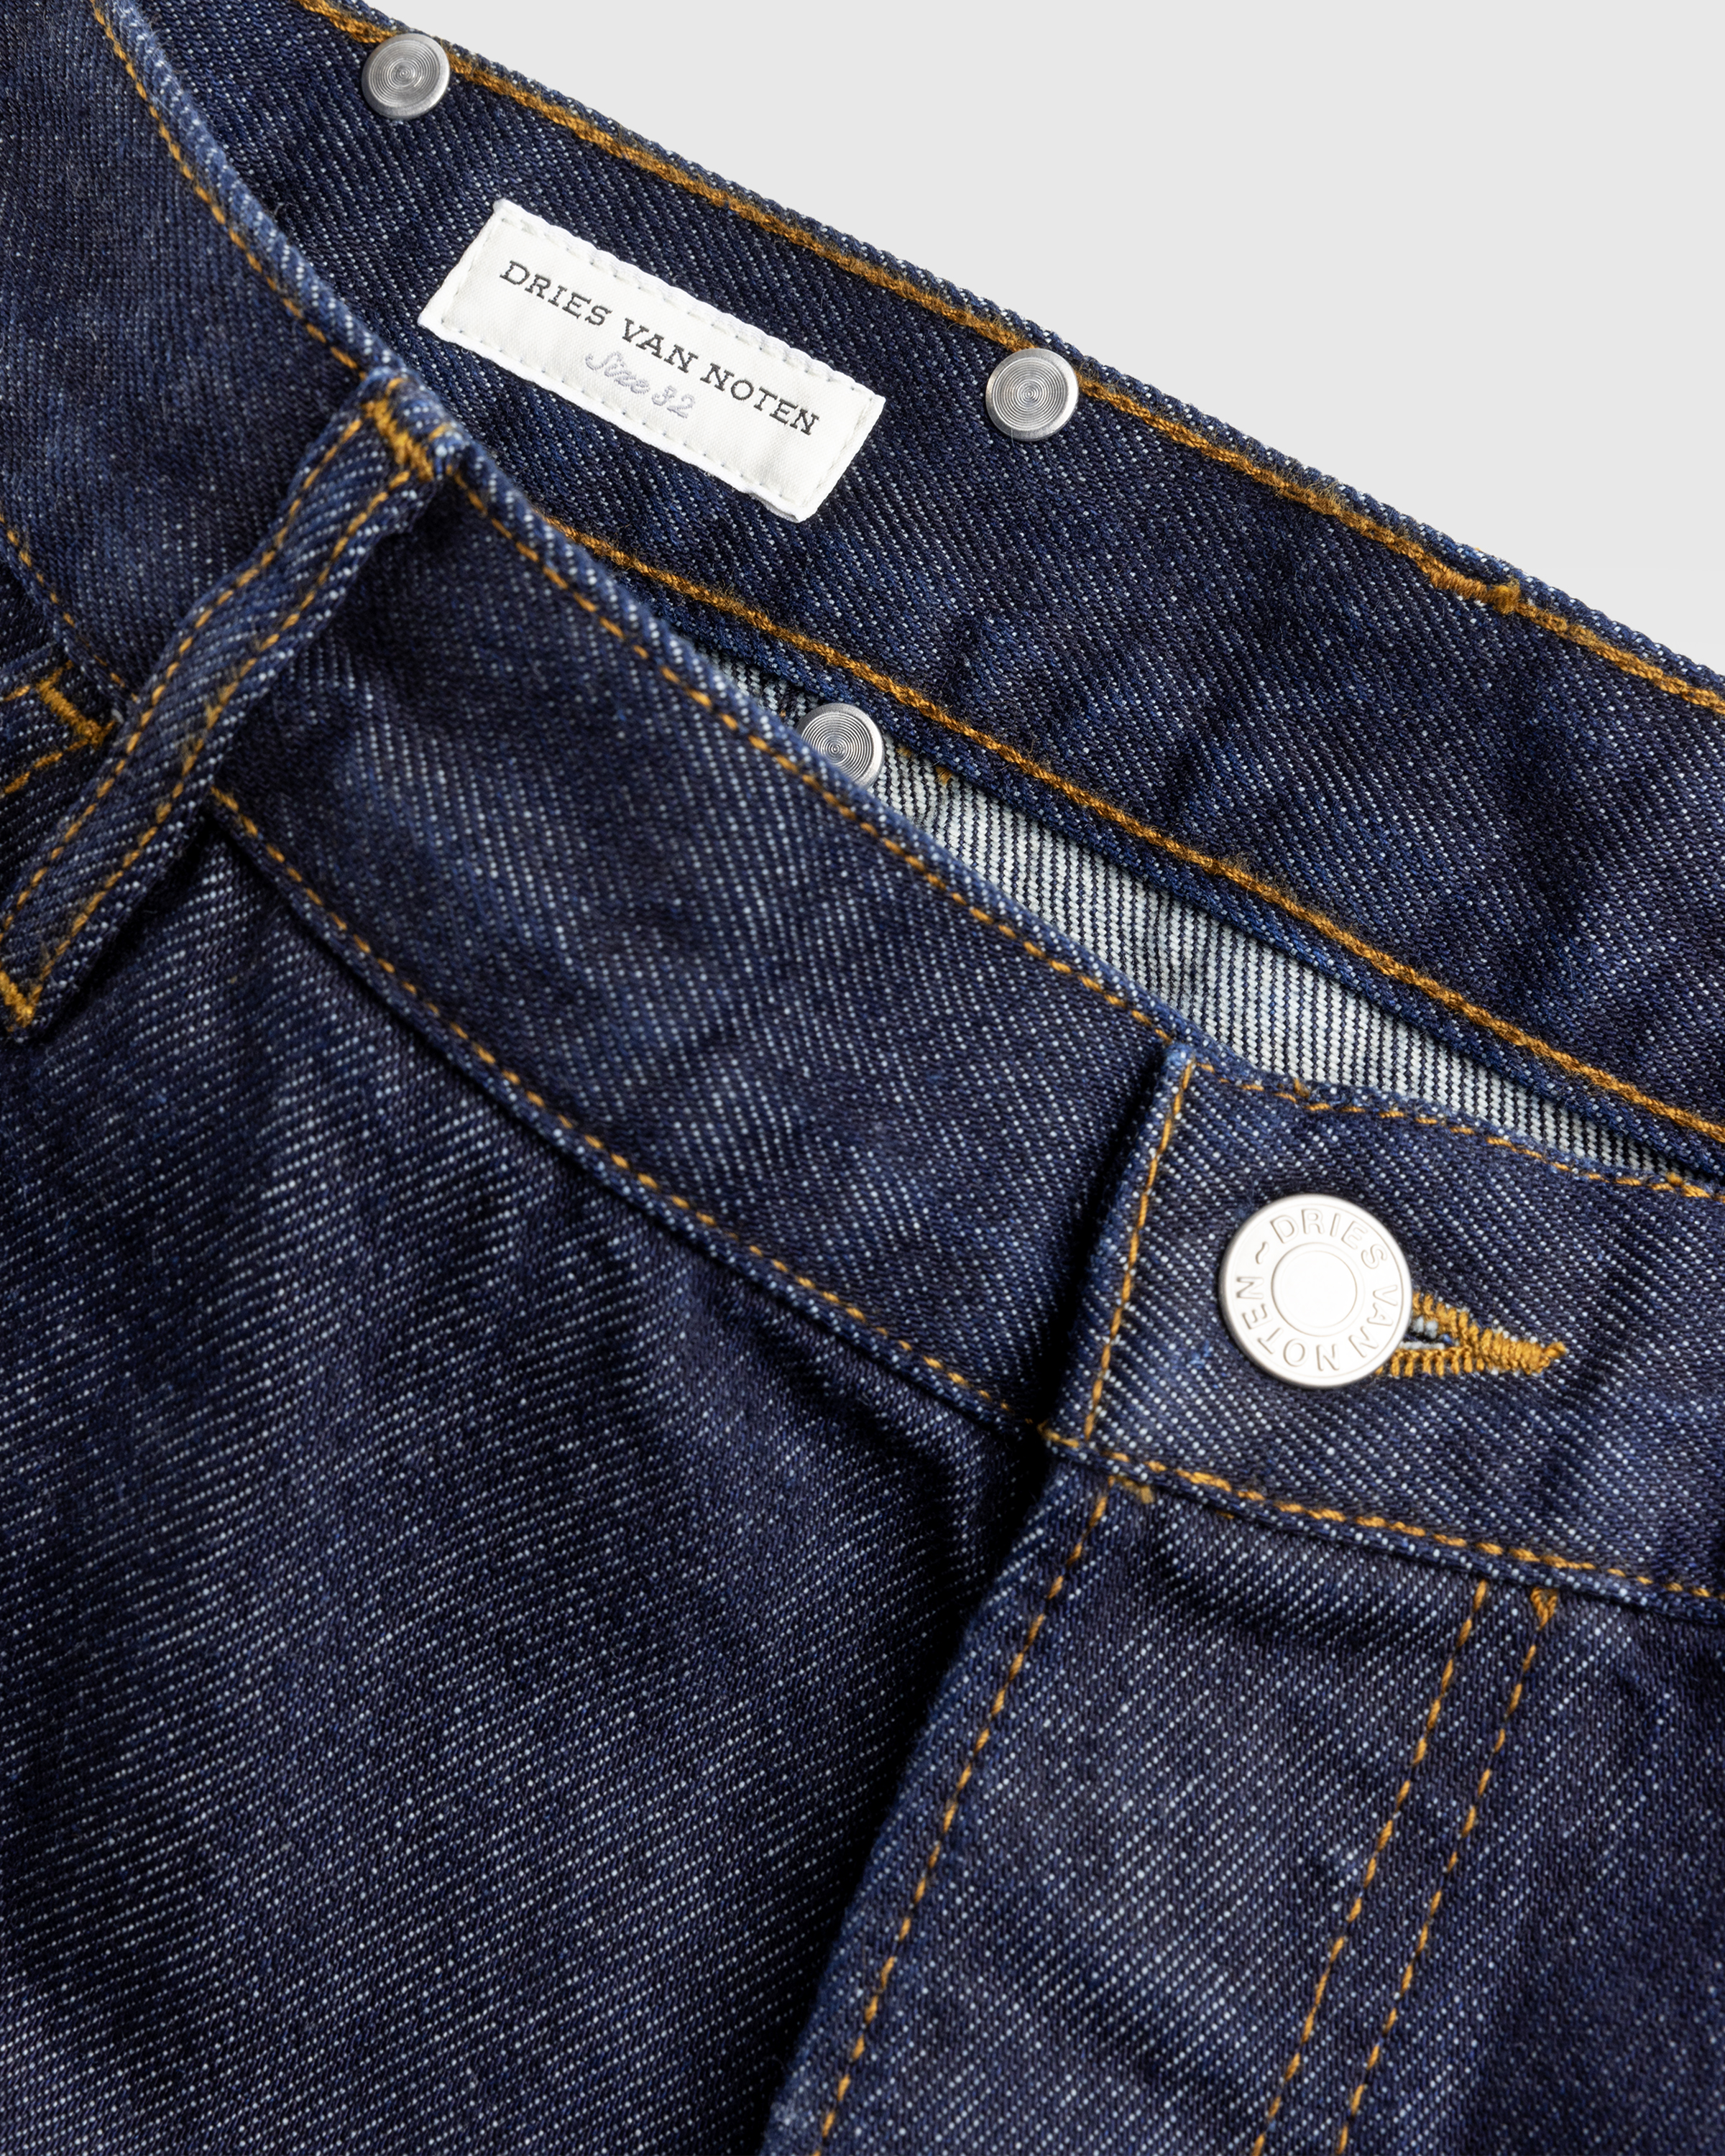 Dries van Noten – Pickerby Pants Indigo - Trousers - Blue - Image 6